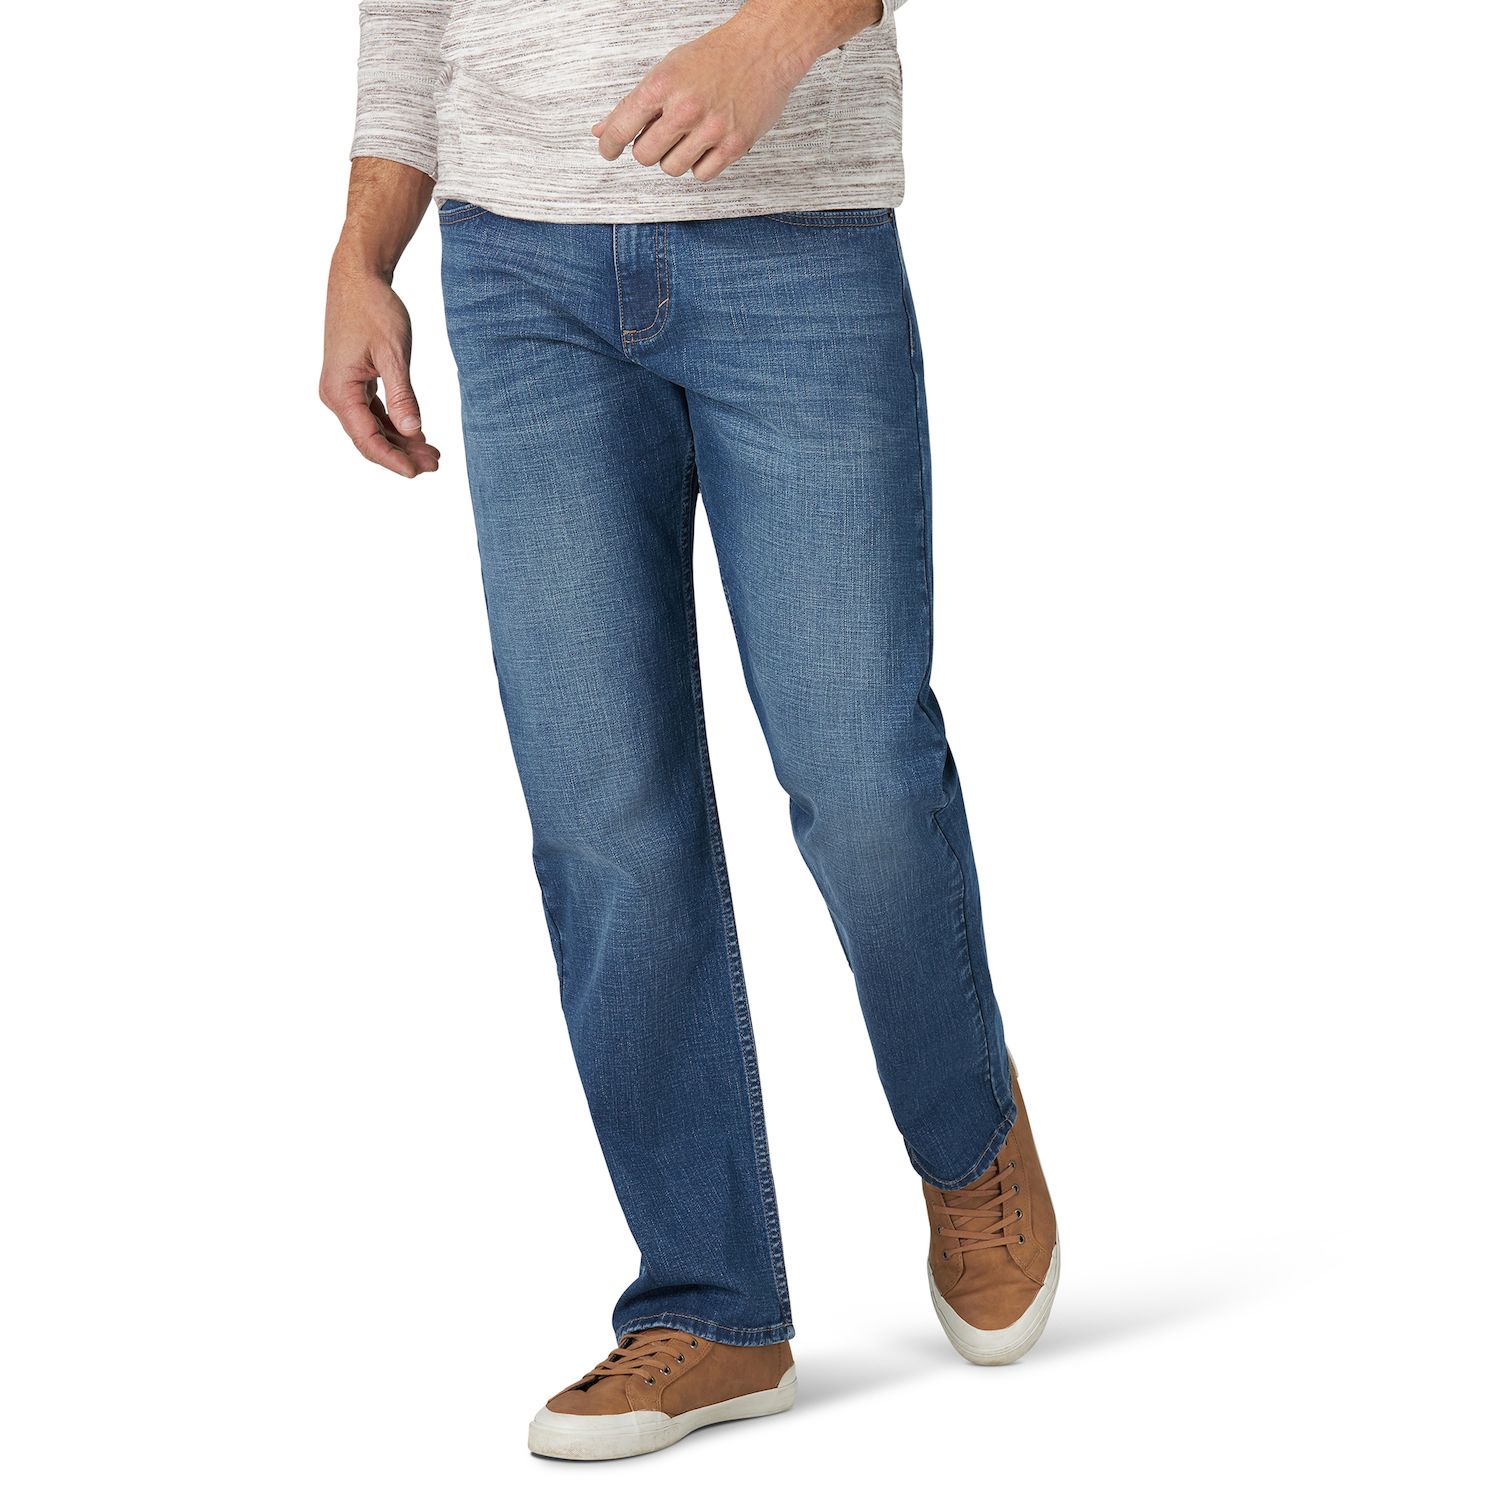 wrangler jeans 9wrlavs